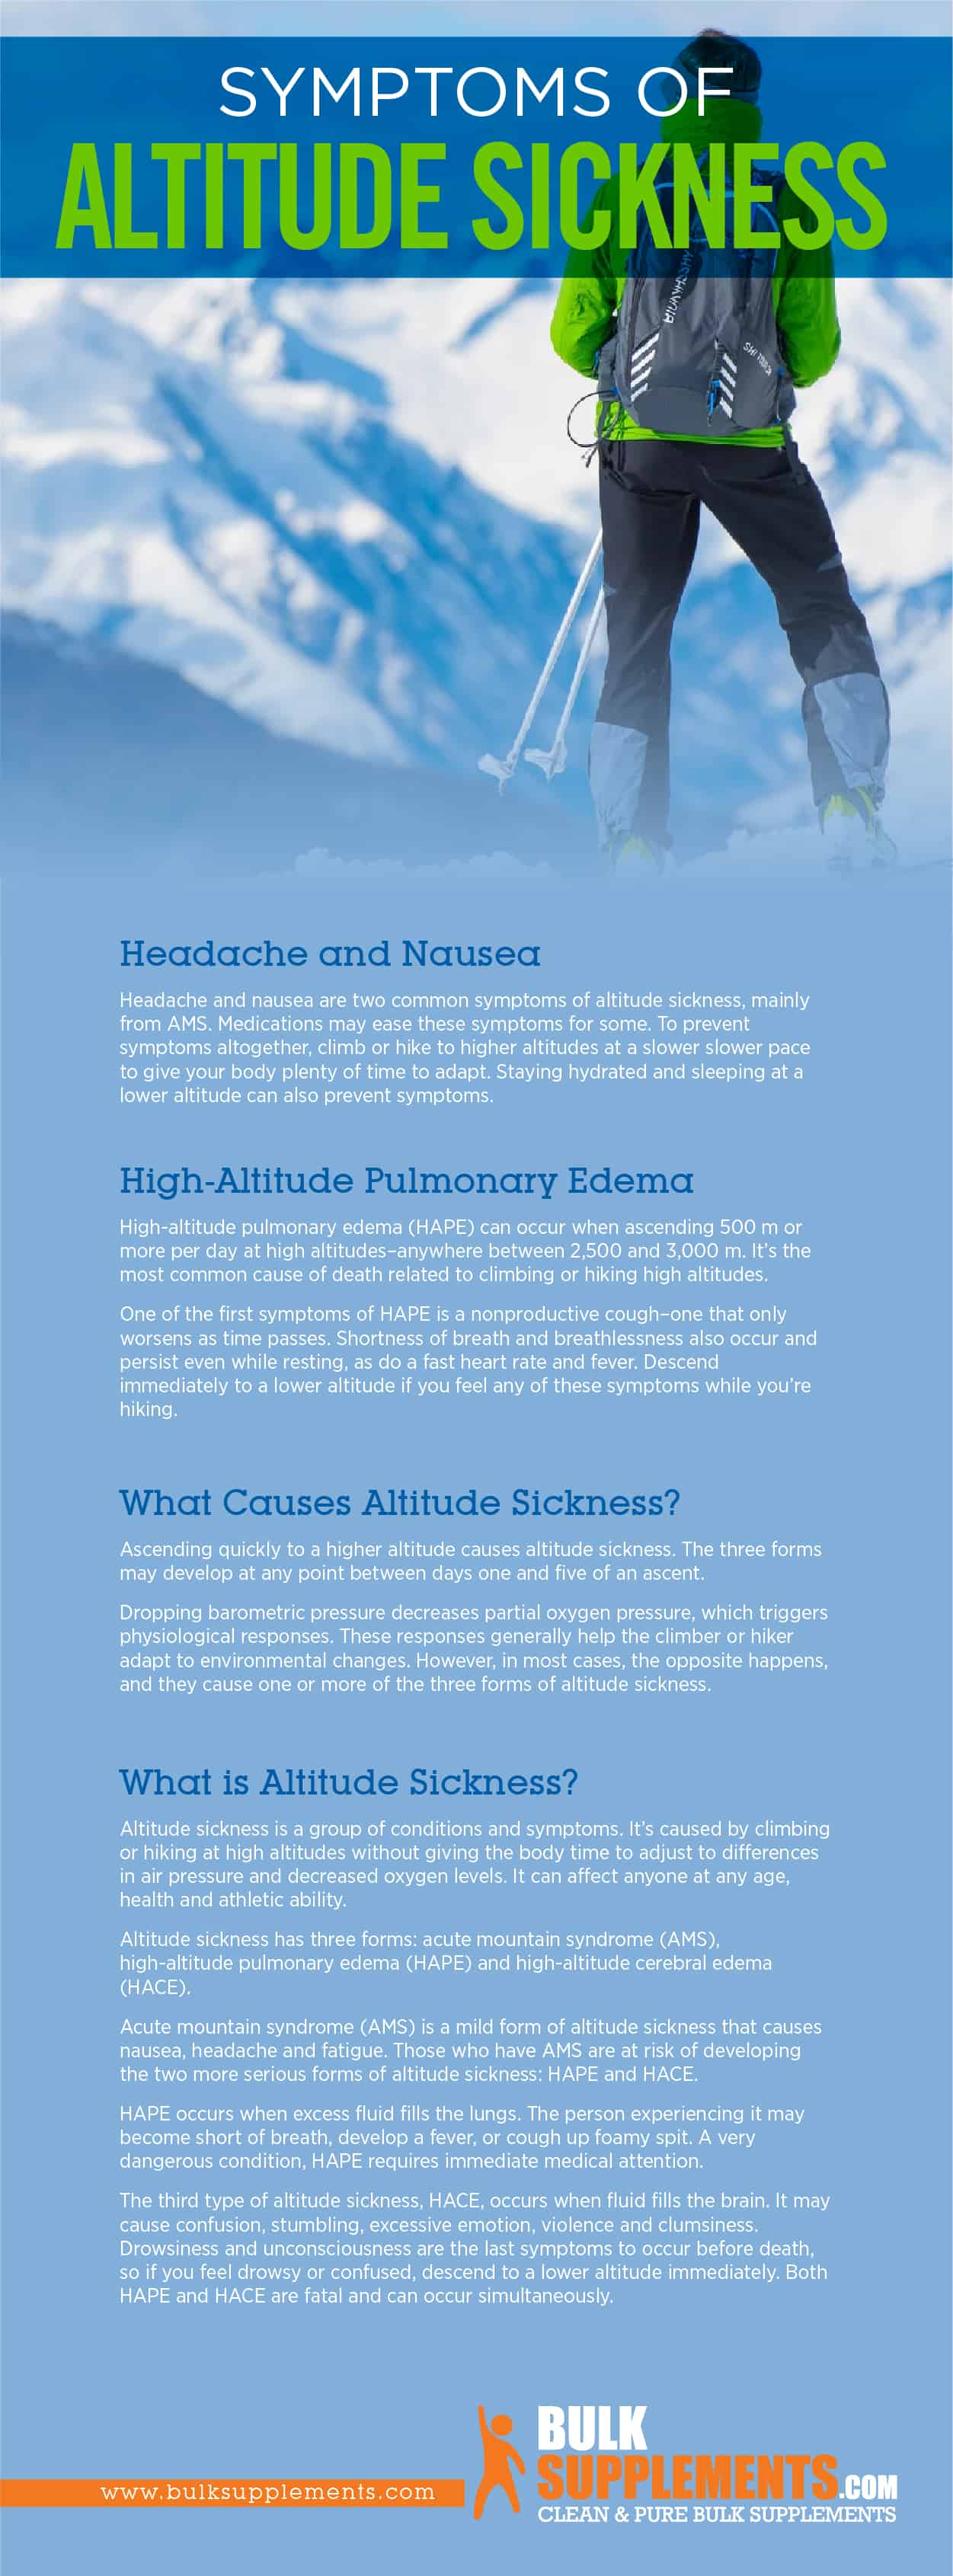 Altitude Sickness Symptoms